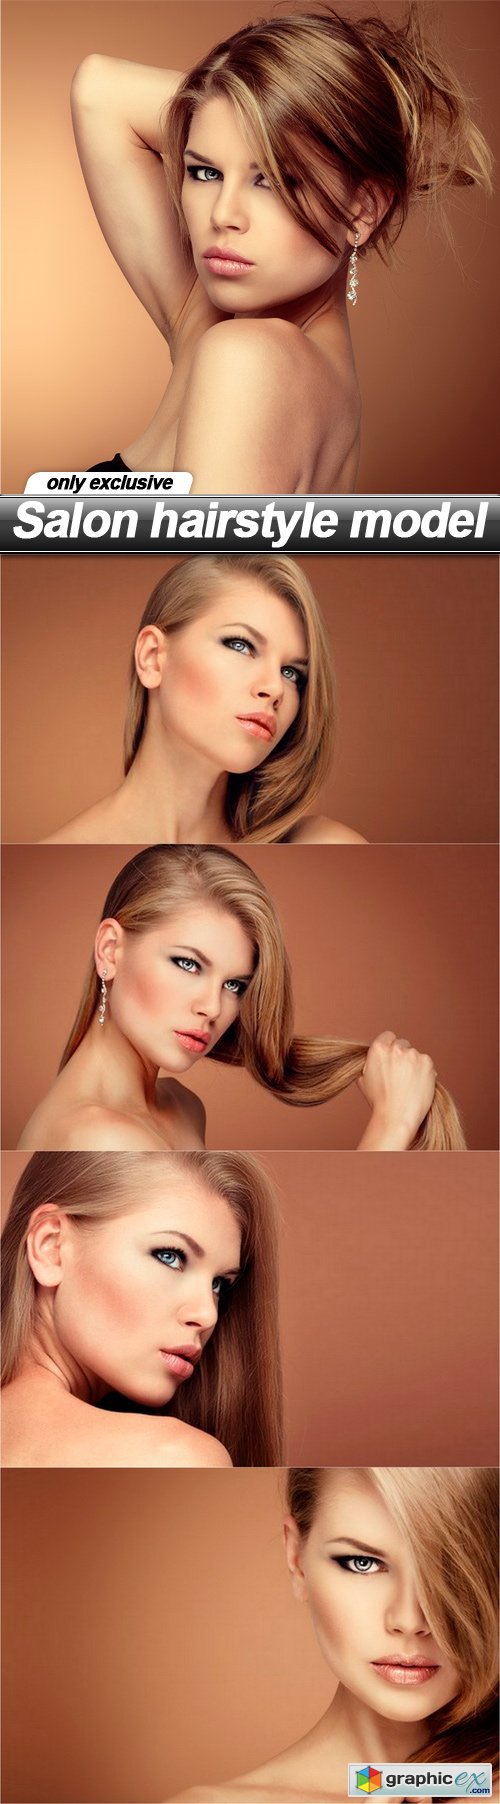 Salon hairstyle model - 5 UHQ JPEG